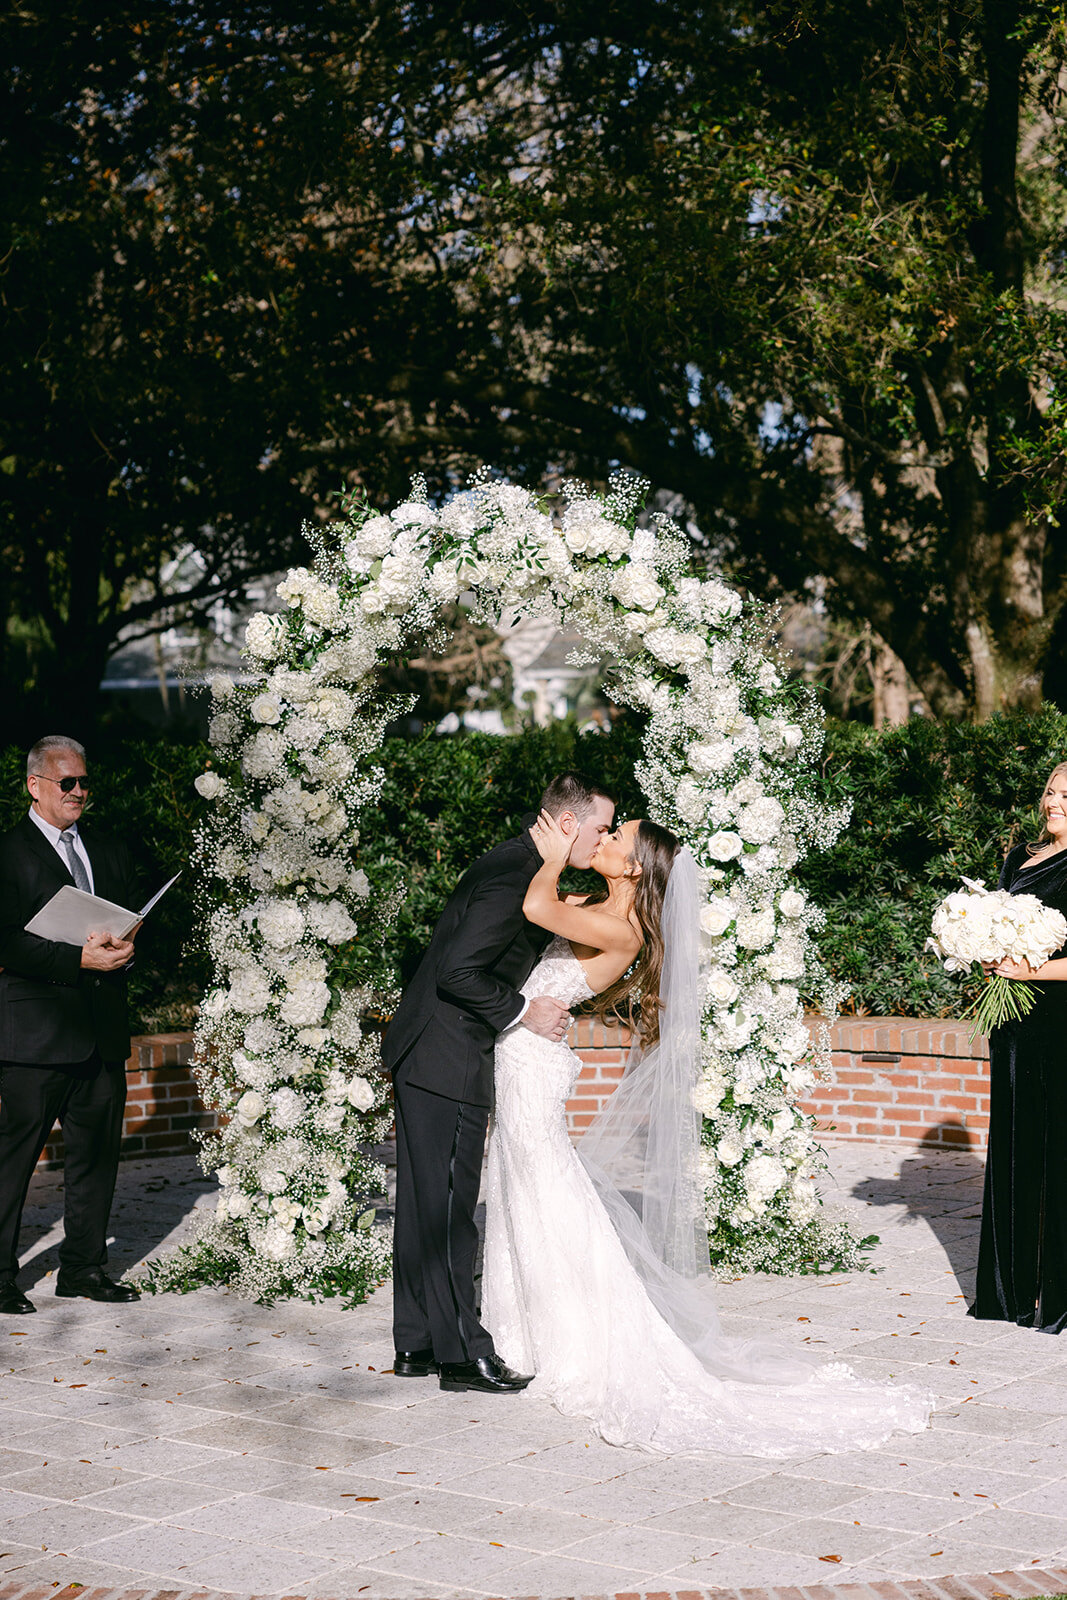 CORNELIA ZAISS PHOTOGRAPHY ASHLYN + RHETT WEDDING SNEAKS 64